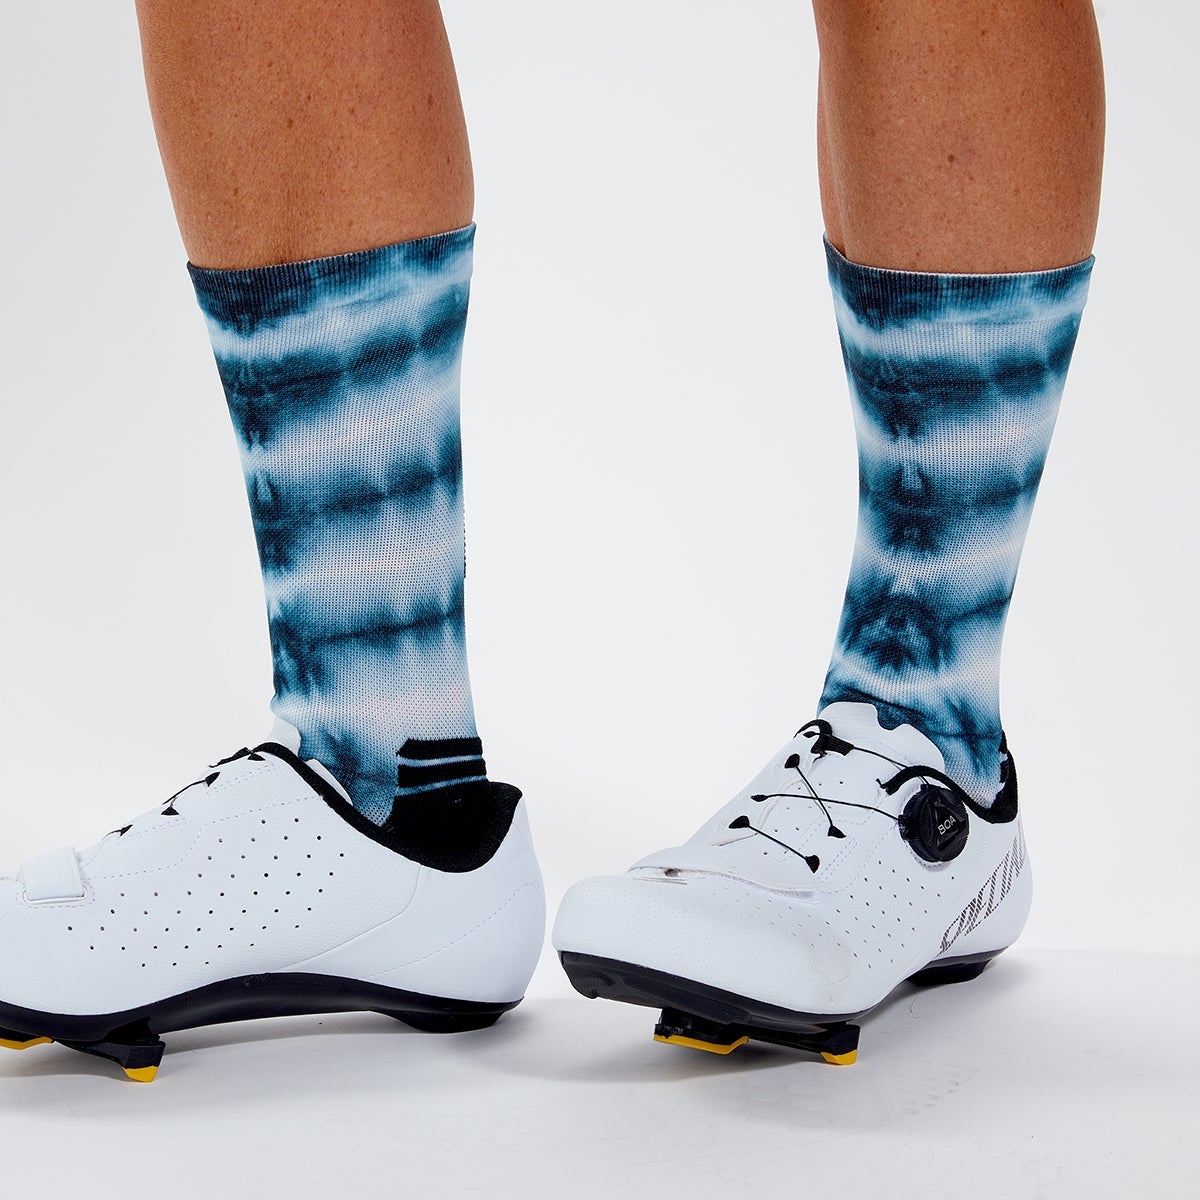 Hylaea Low Cut Socks for Running Sports Athletic Walking Golf Tie-dyed  Pattern No Show Compression Blue Green Medium 